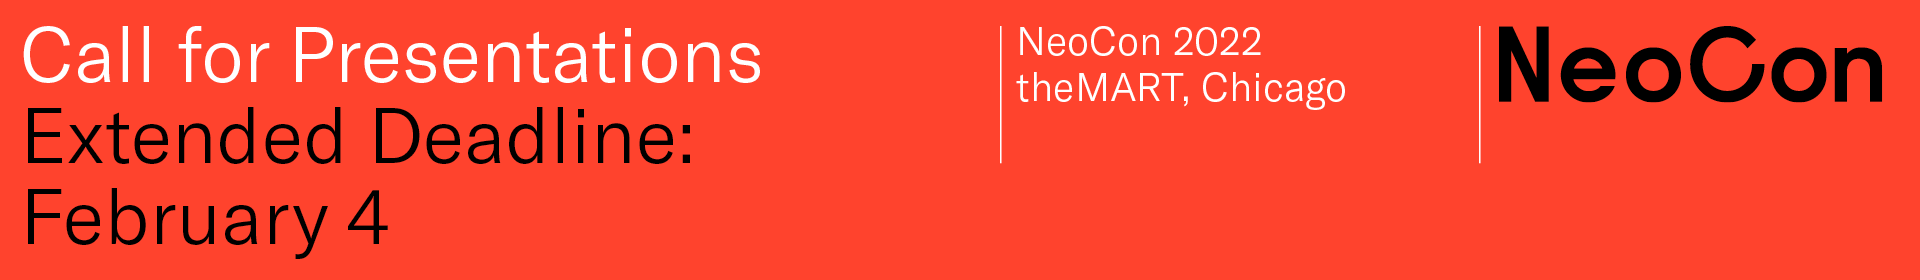 NeoCon 2022 Event Banner